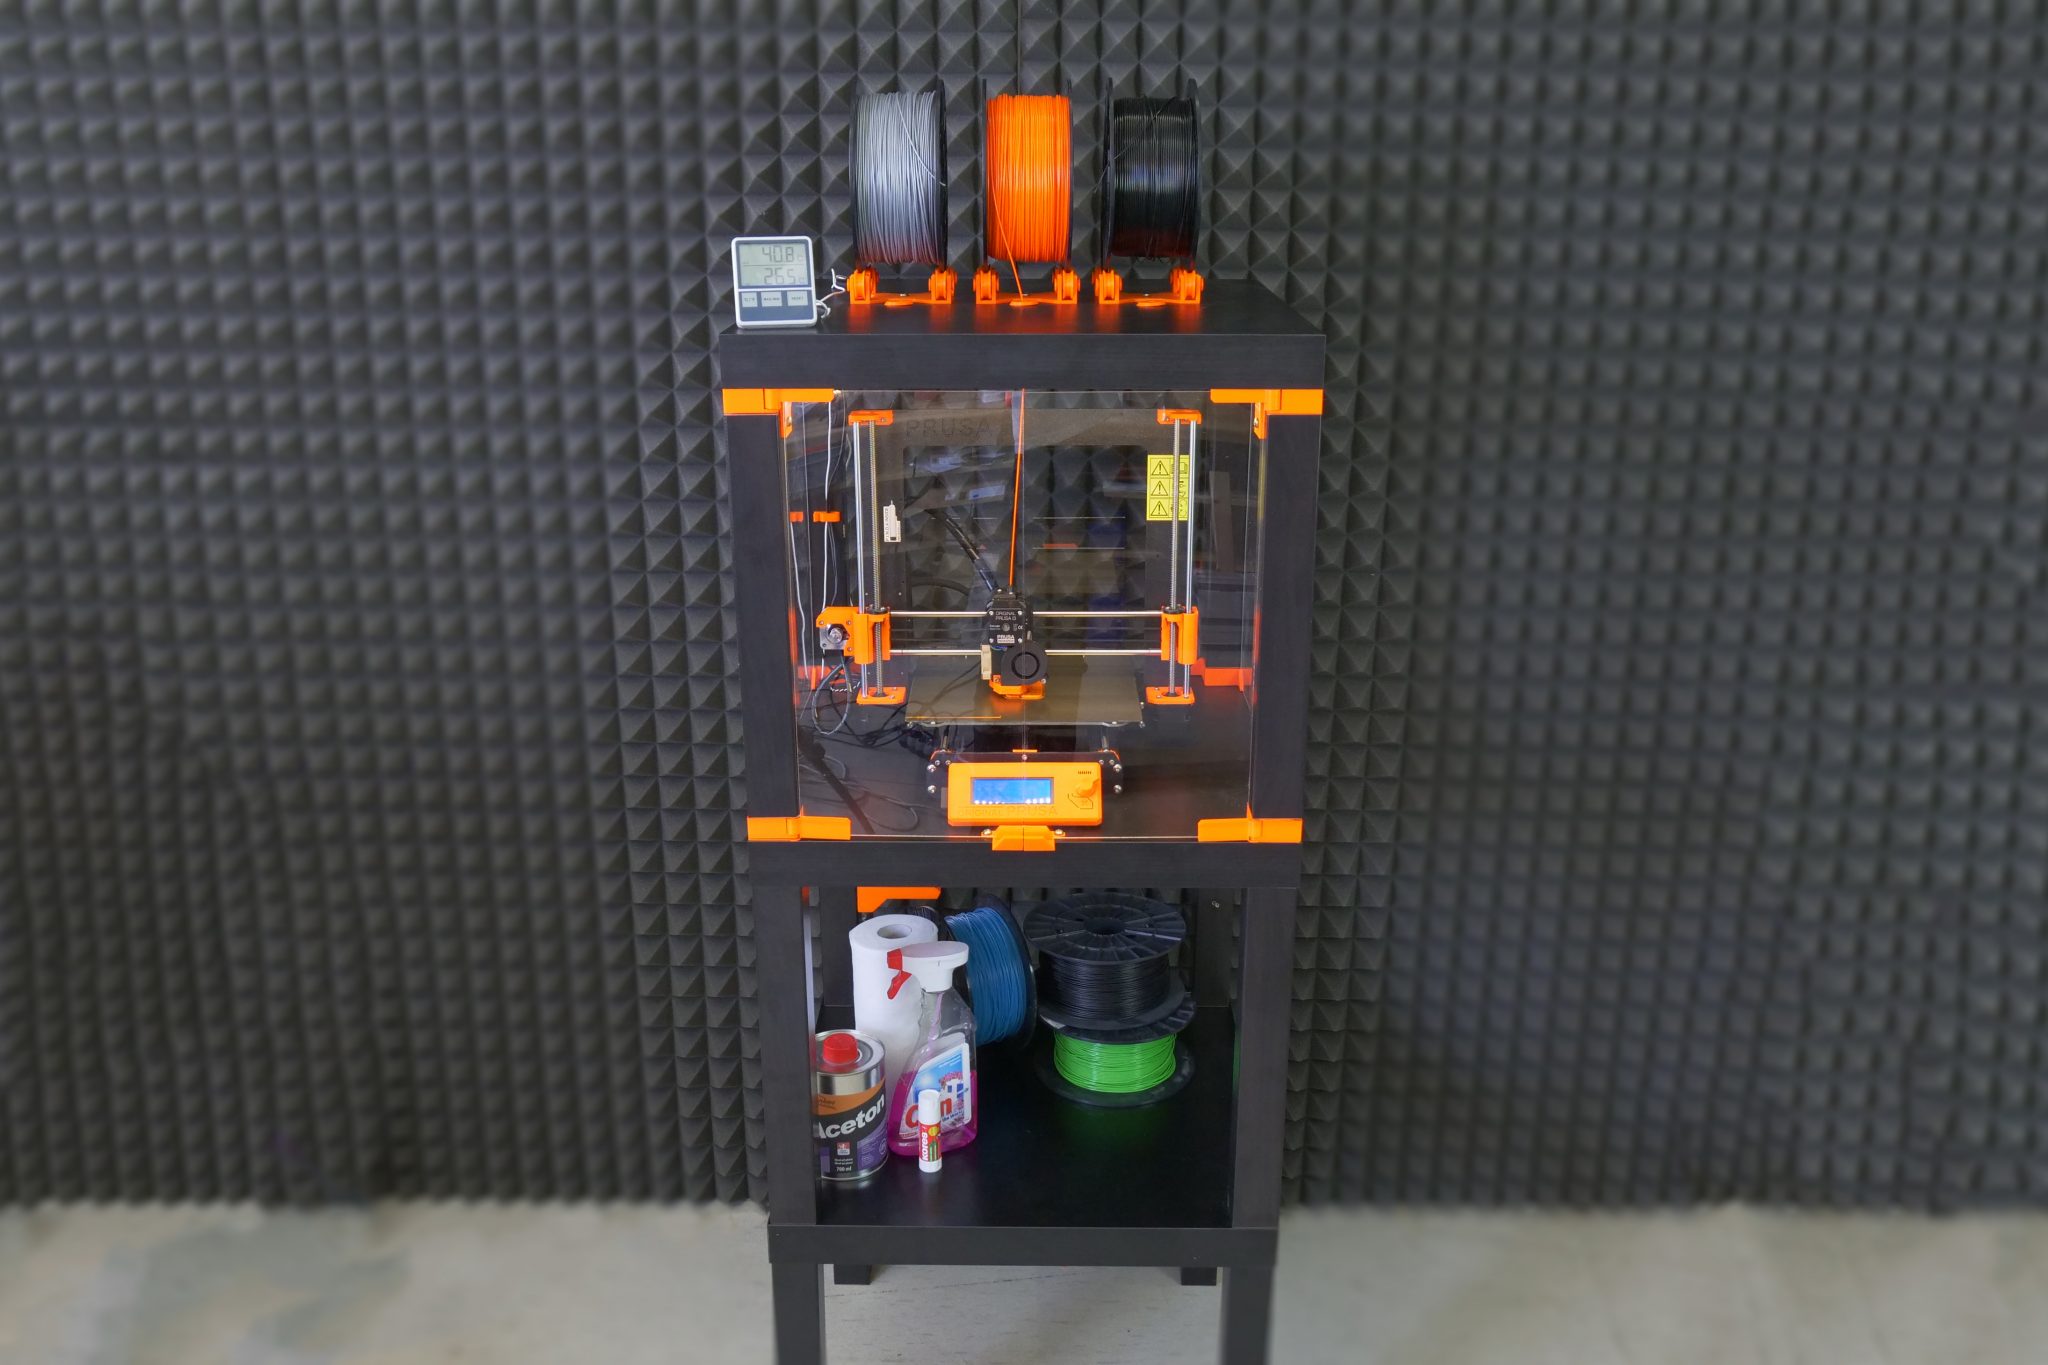 How to cheap enclosure for your 3D printer - Original Prusa Printers